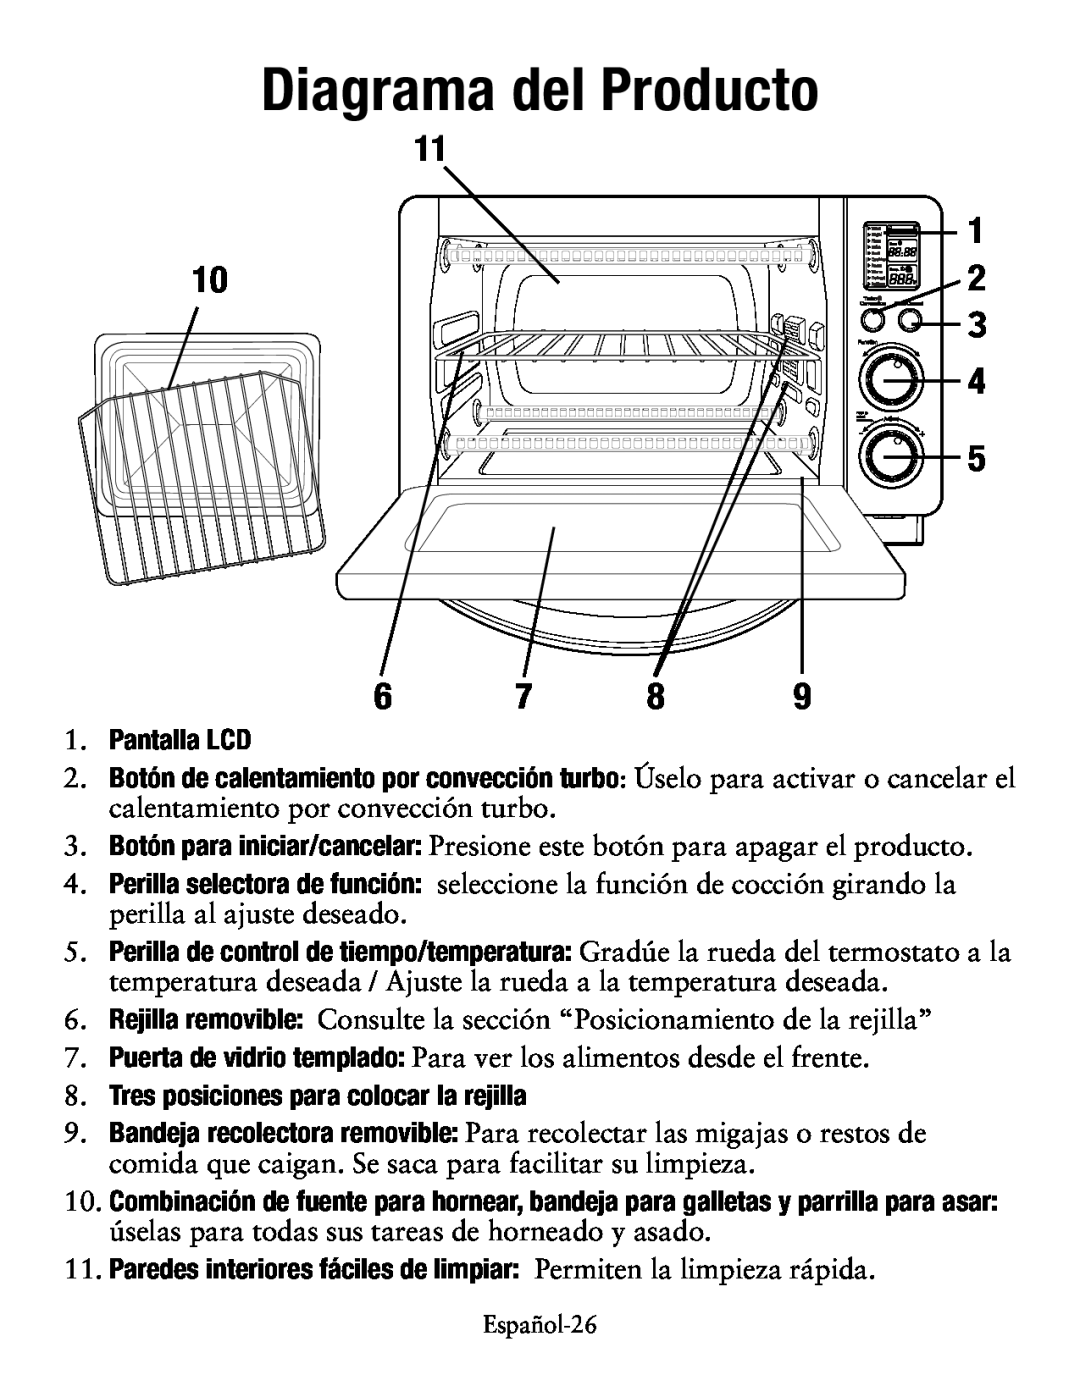 Oster TSSTTVDG01, Digital Countertop Oven user manual Diagrama del Producto 